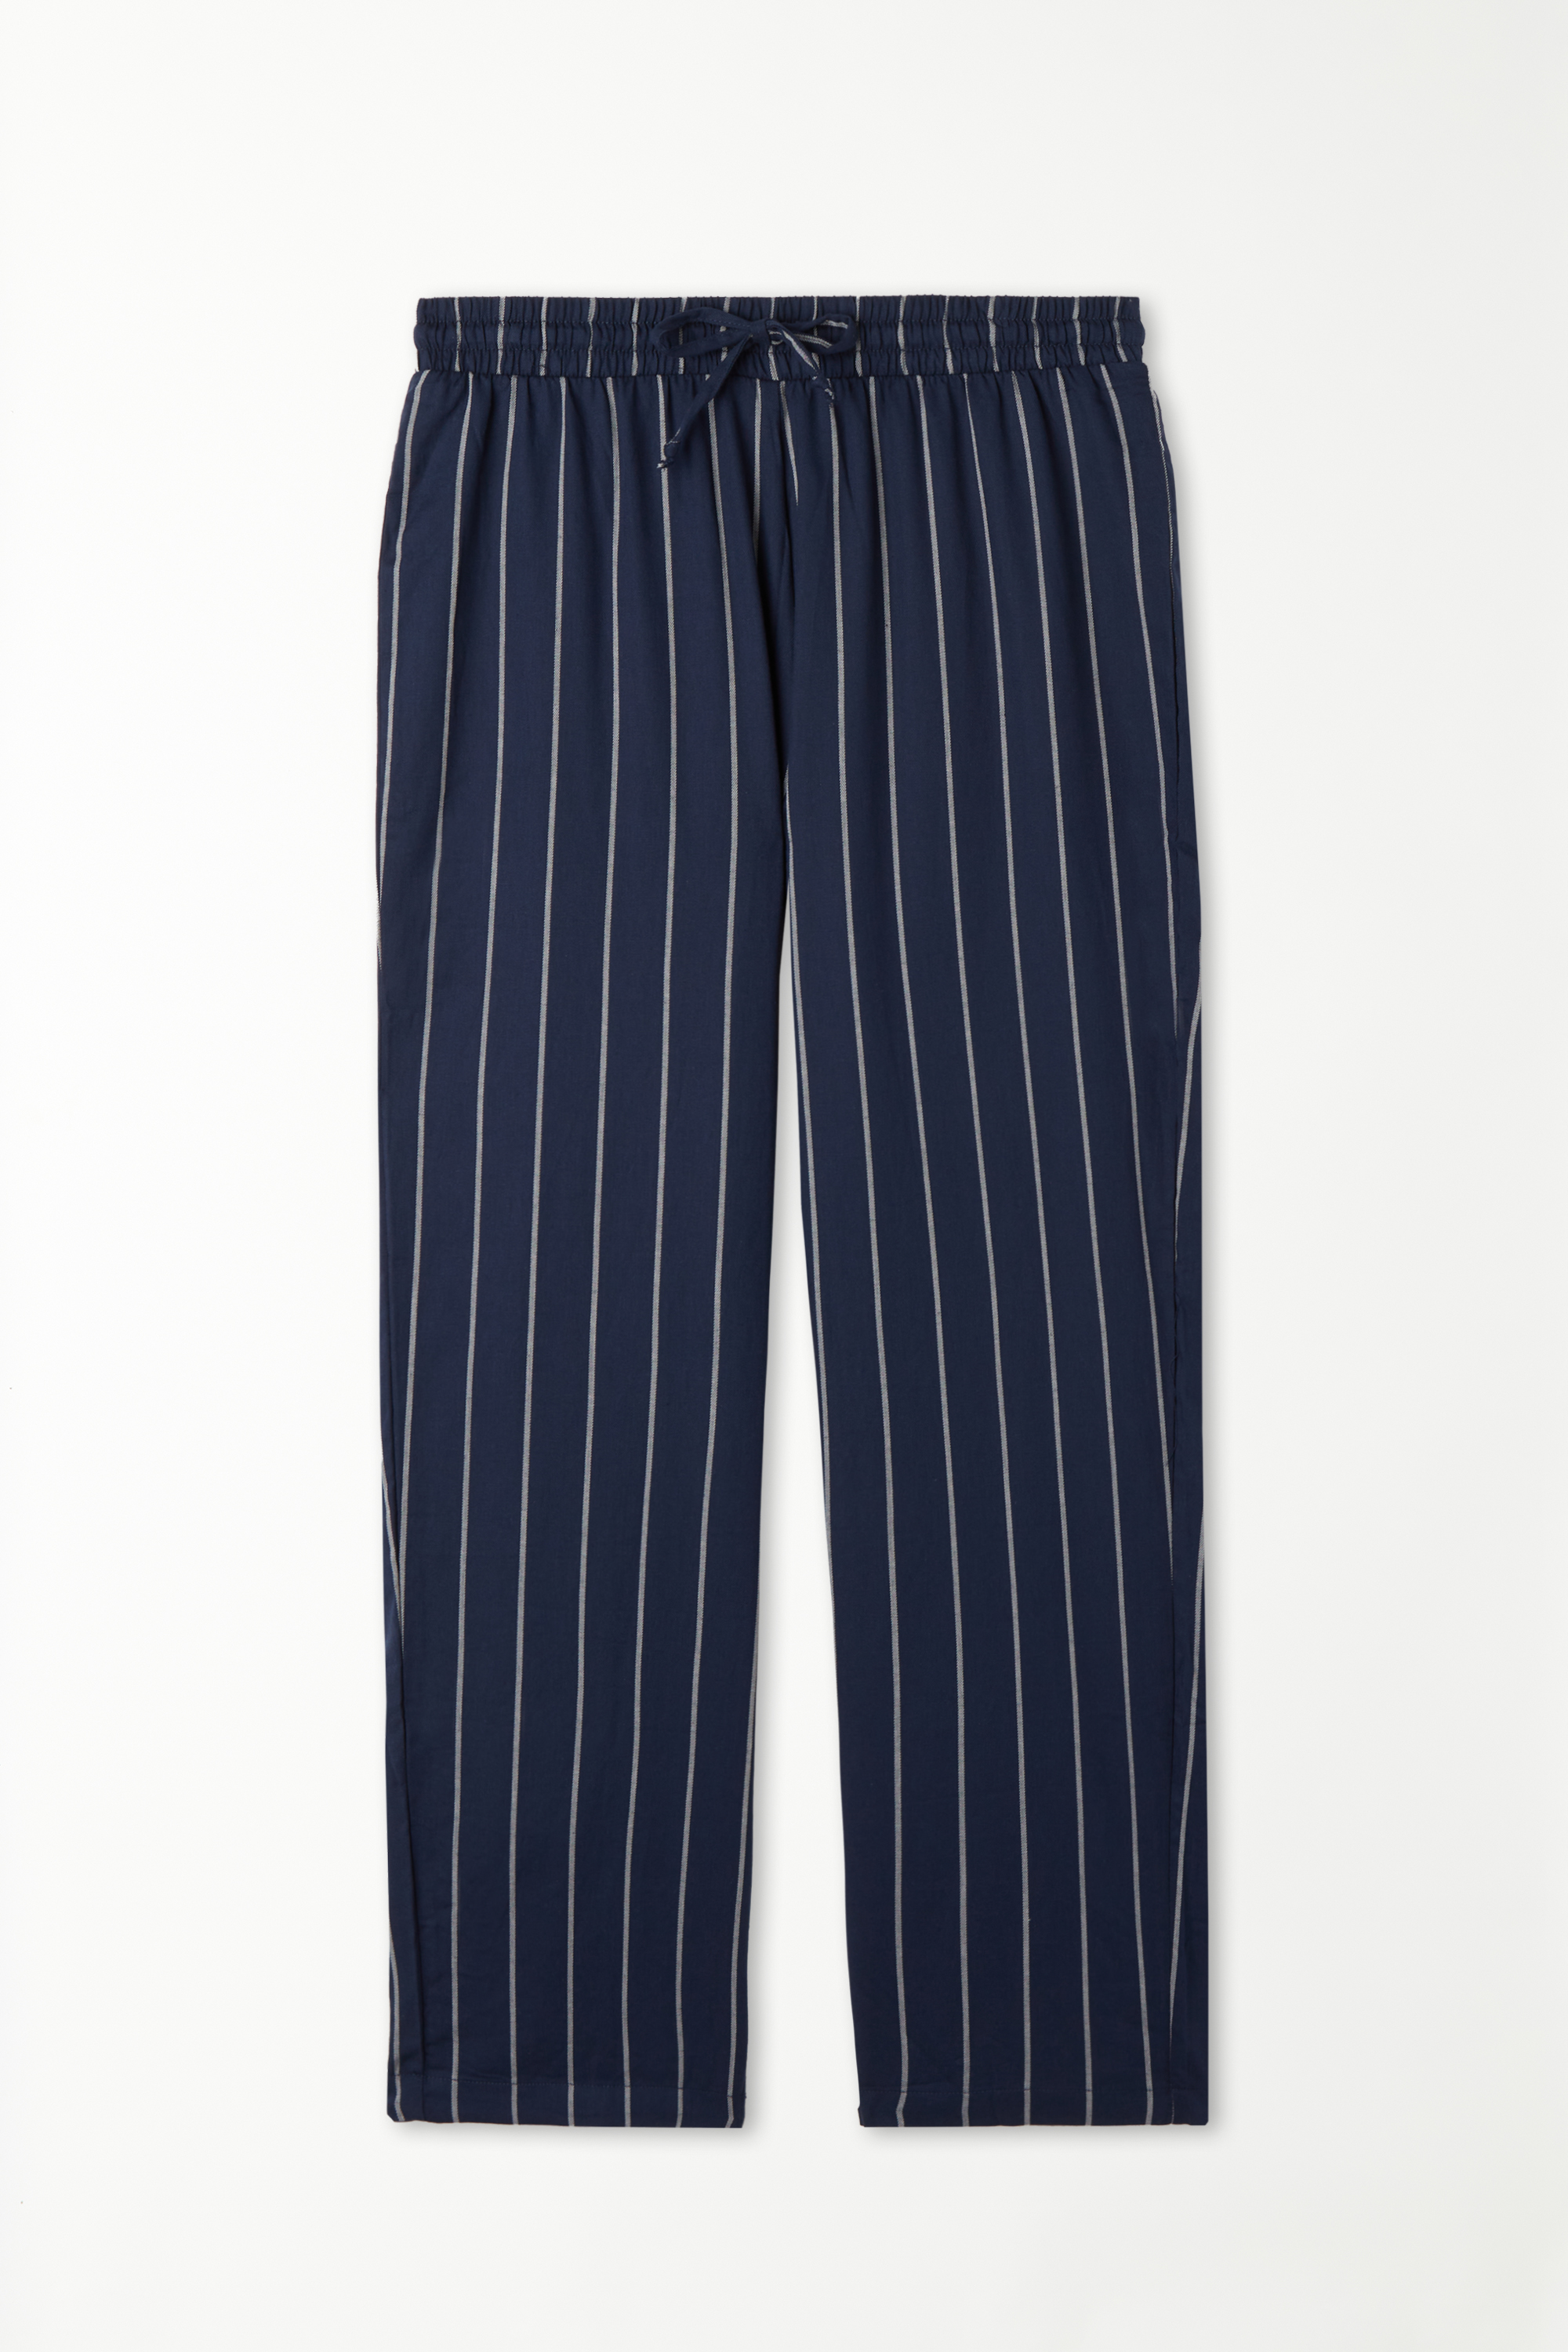 Full Length Straight Cut Cotton Cloth Pants